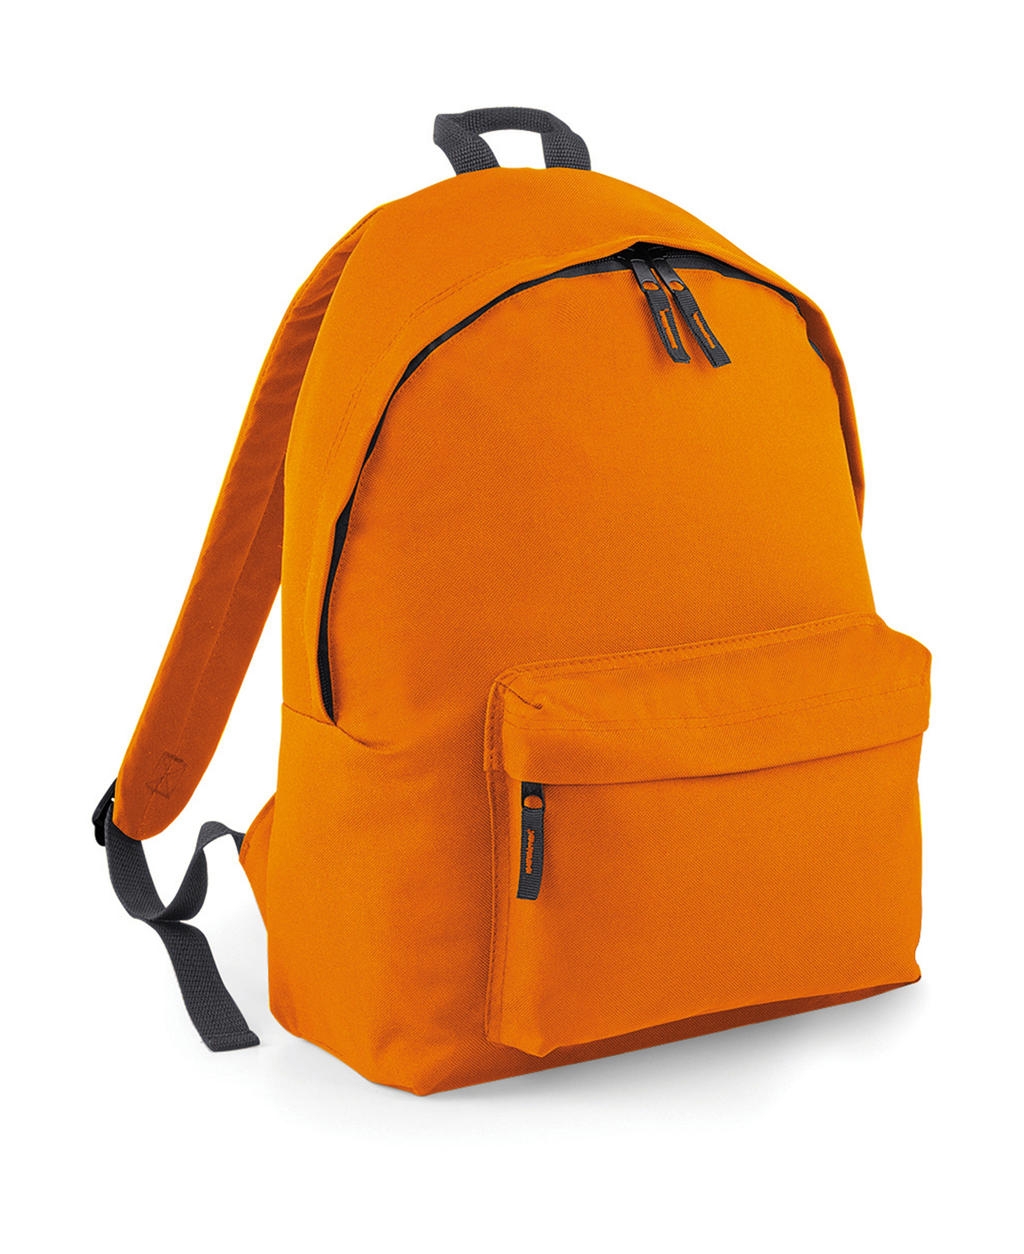 Fashion Backpack Orange/Graphite Grey Orange